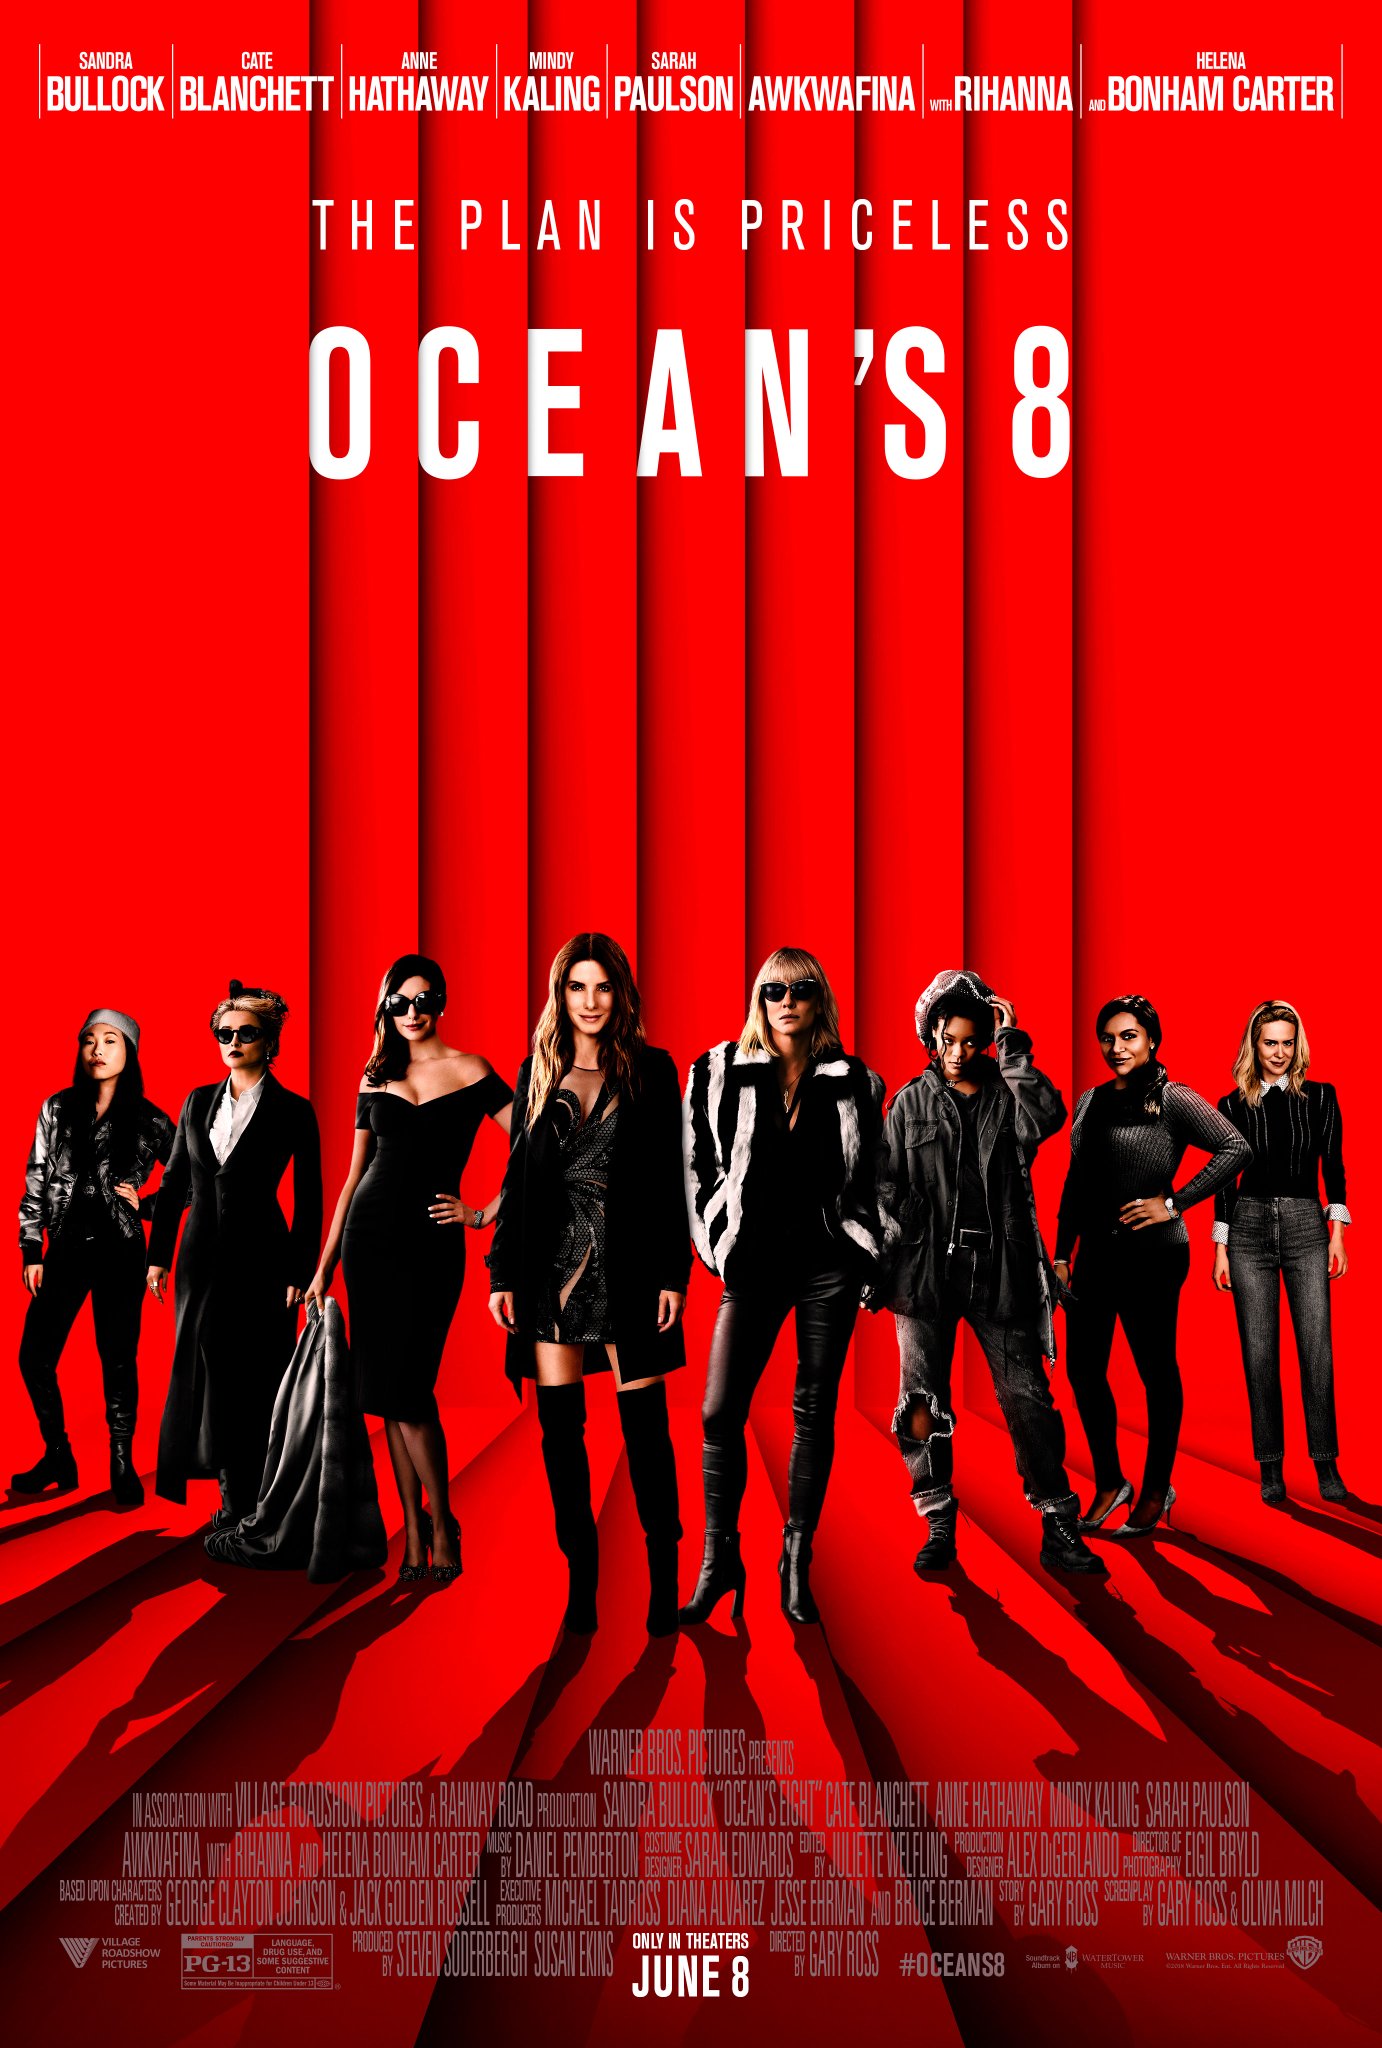 ocean-s-8-poster-the-plan-is-priceless-ocean-s-8-photo-41333593